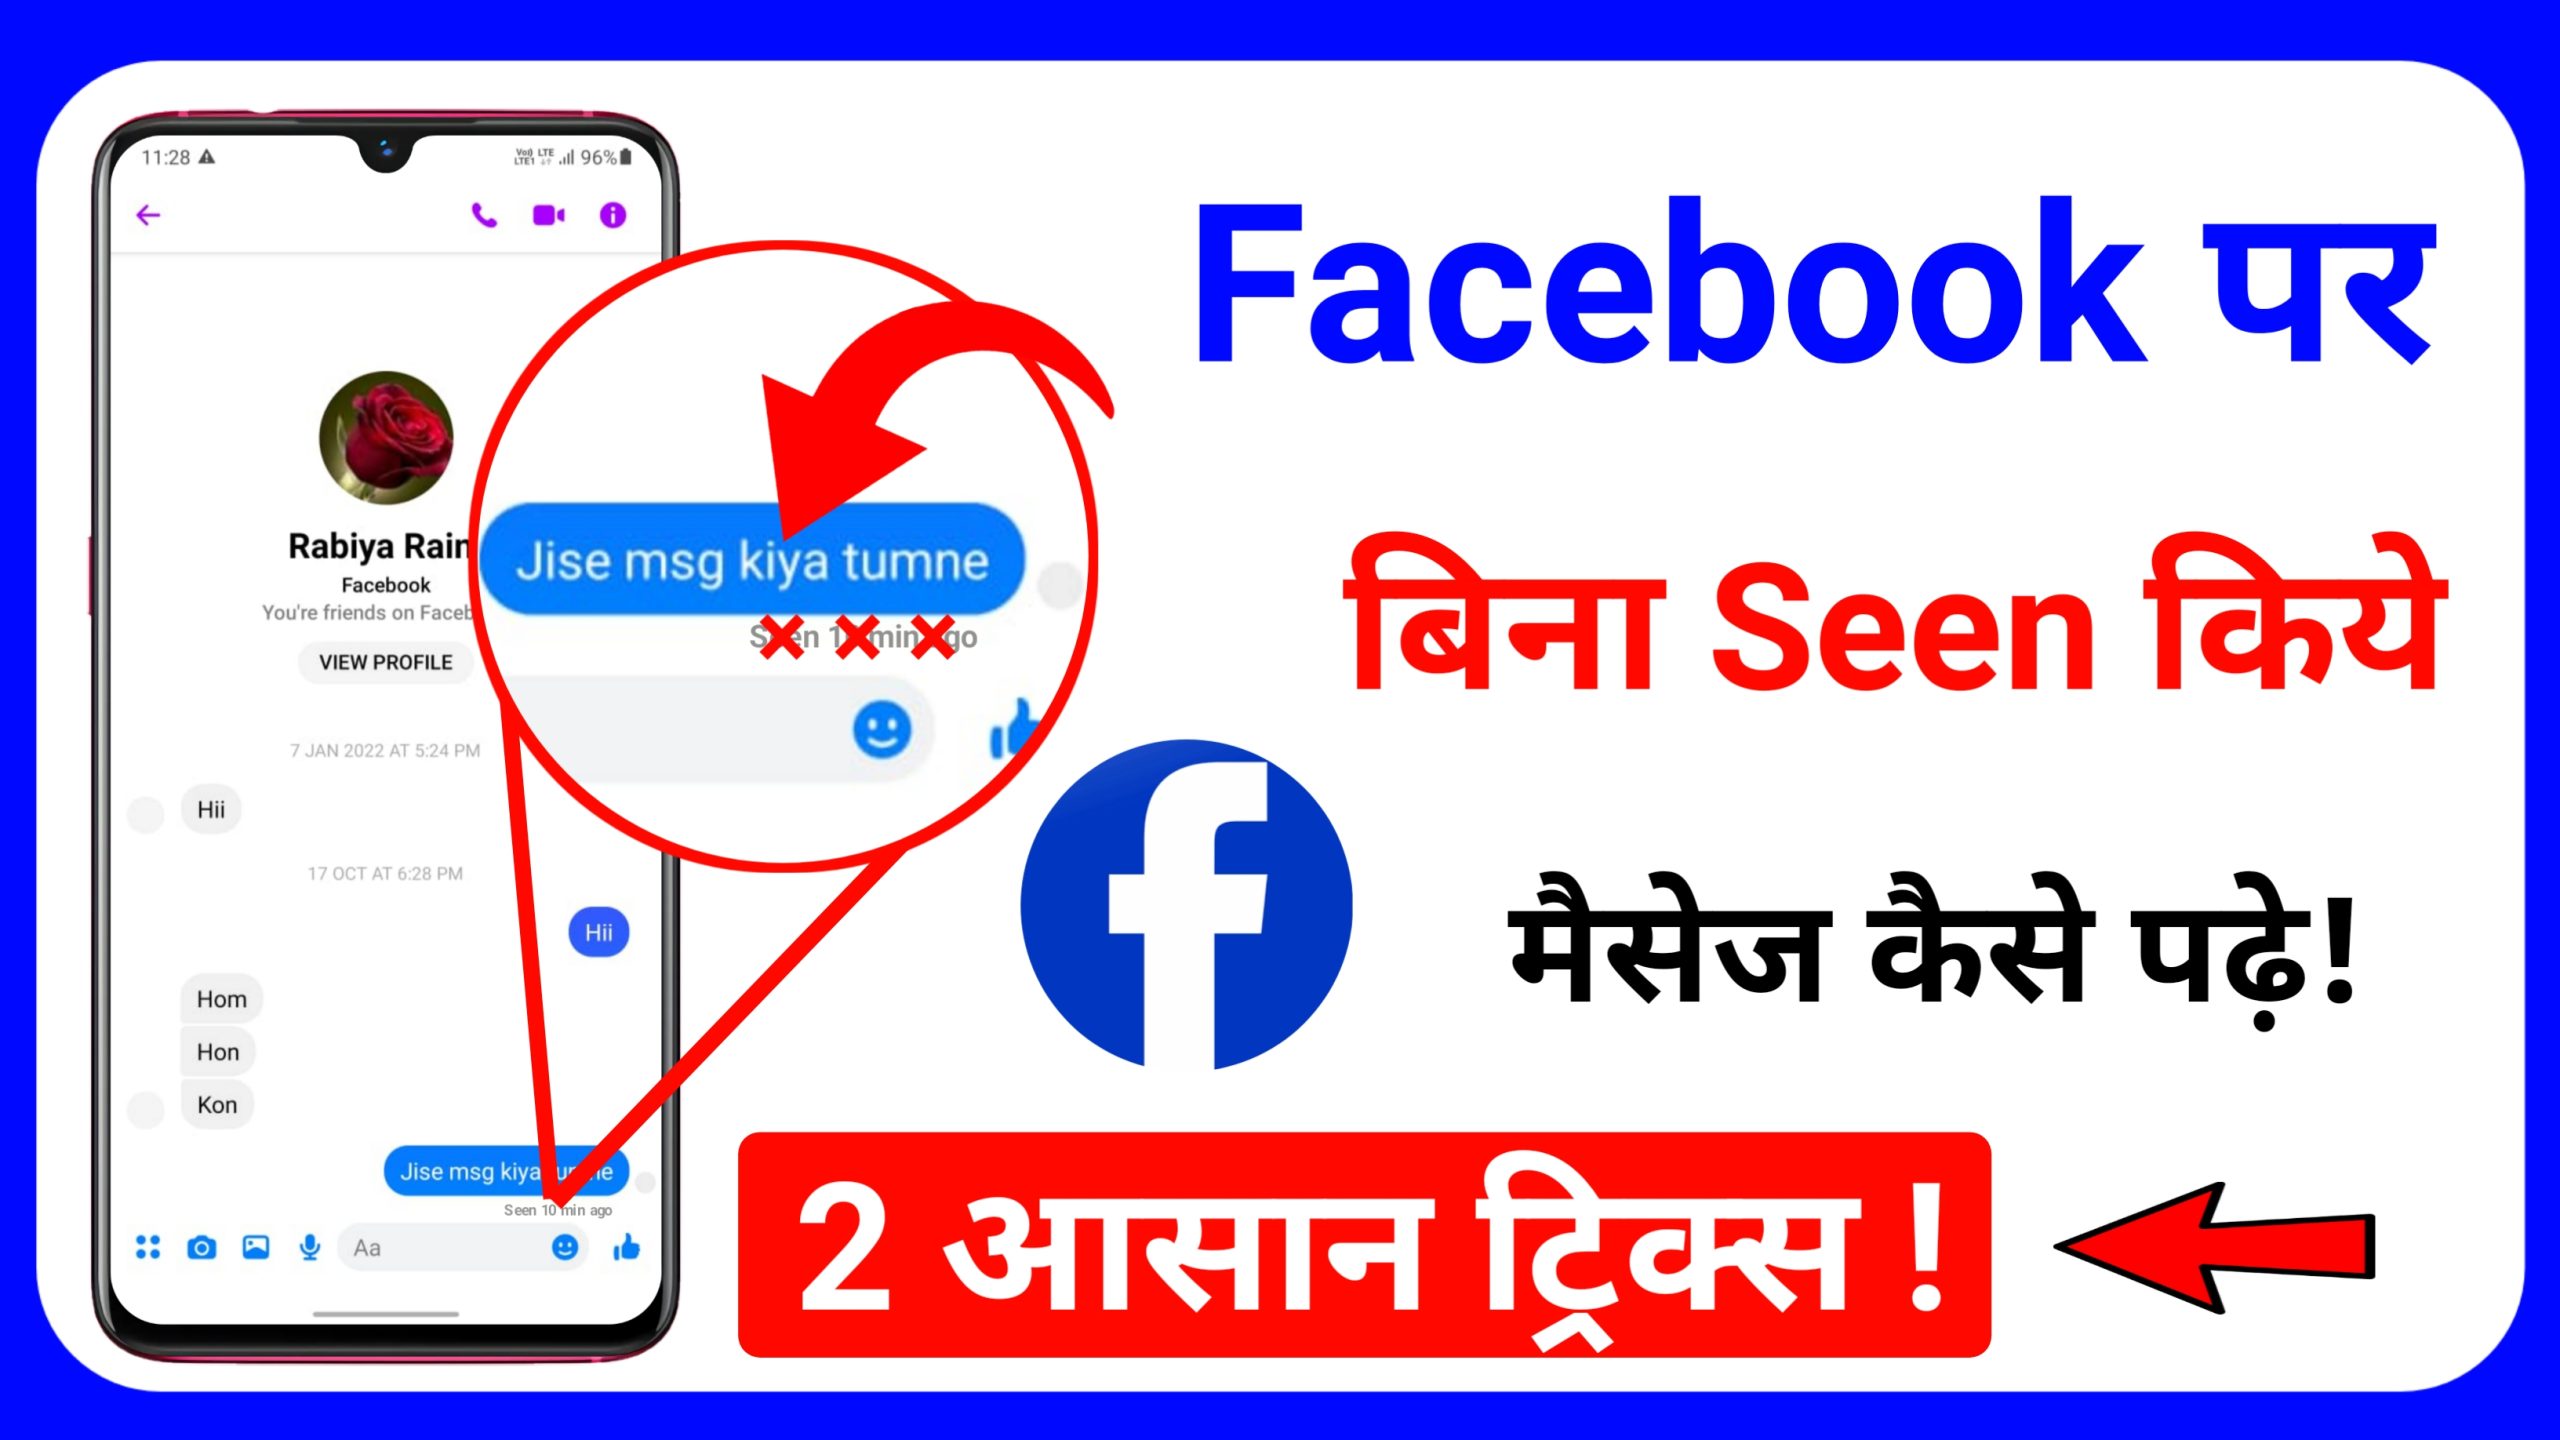 Facebook par bina Seen Kare Message Kaise Padhe - 2 Easy Tricks Try Now